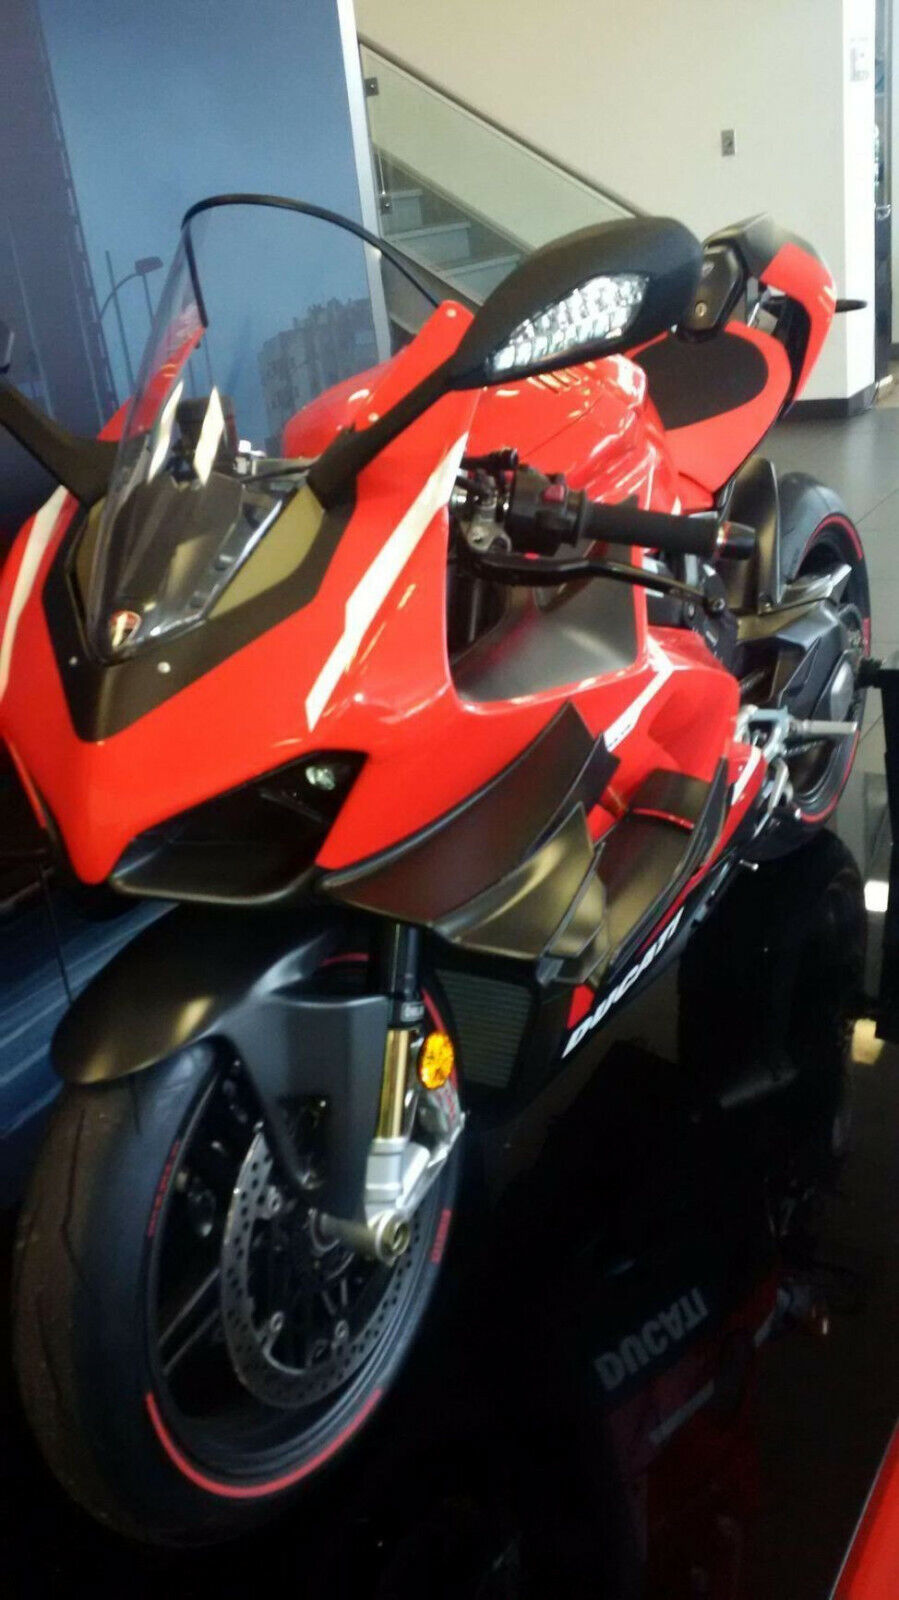 2021 Ducati Superleggera used 700 kms. as new Factory Warranty Akrapovic Exhaust